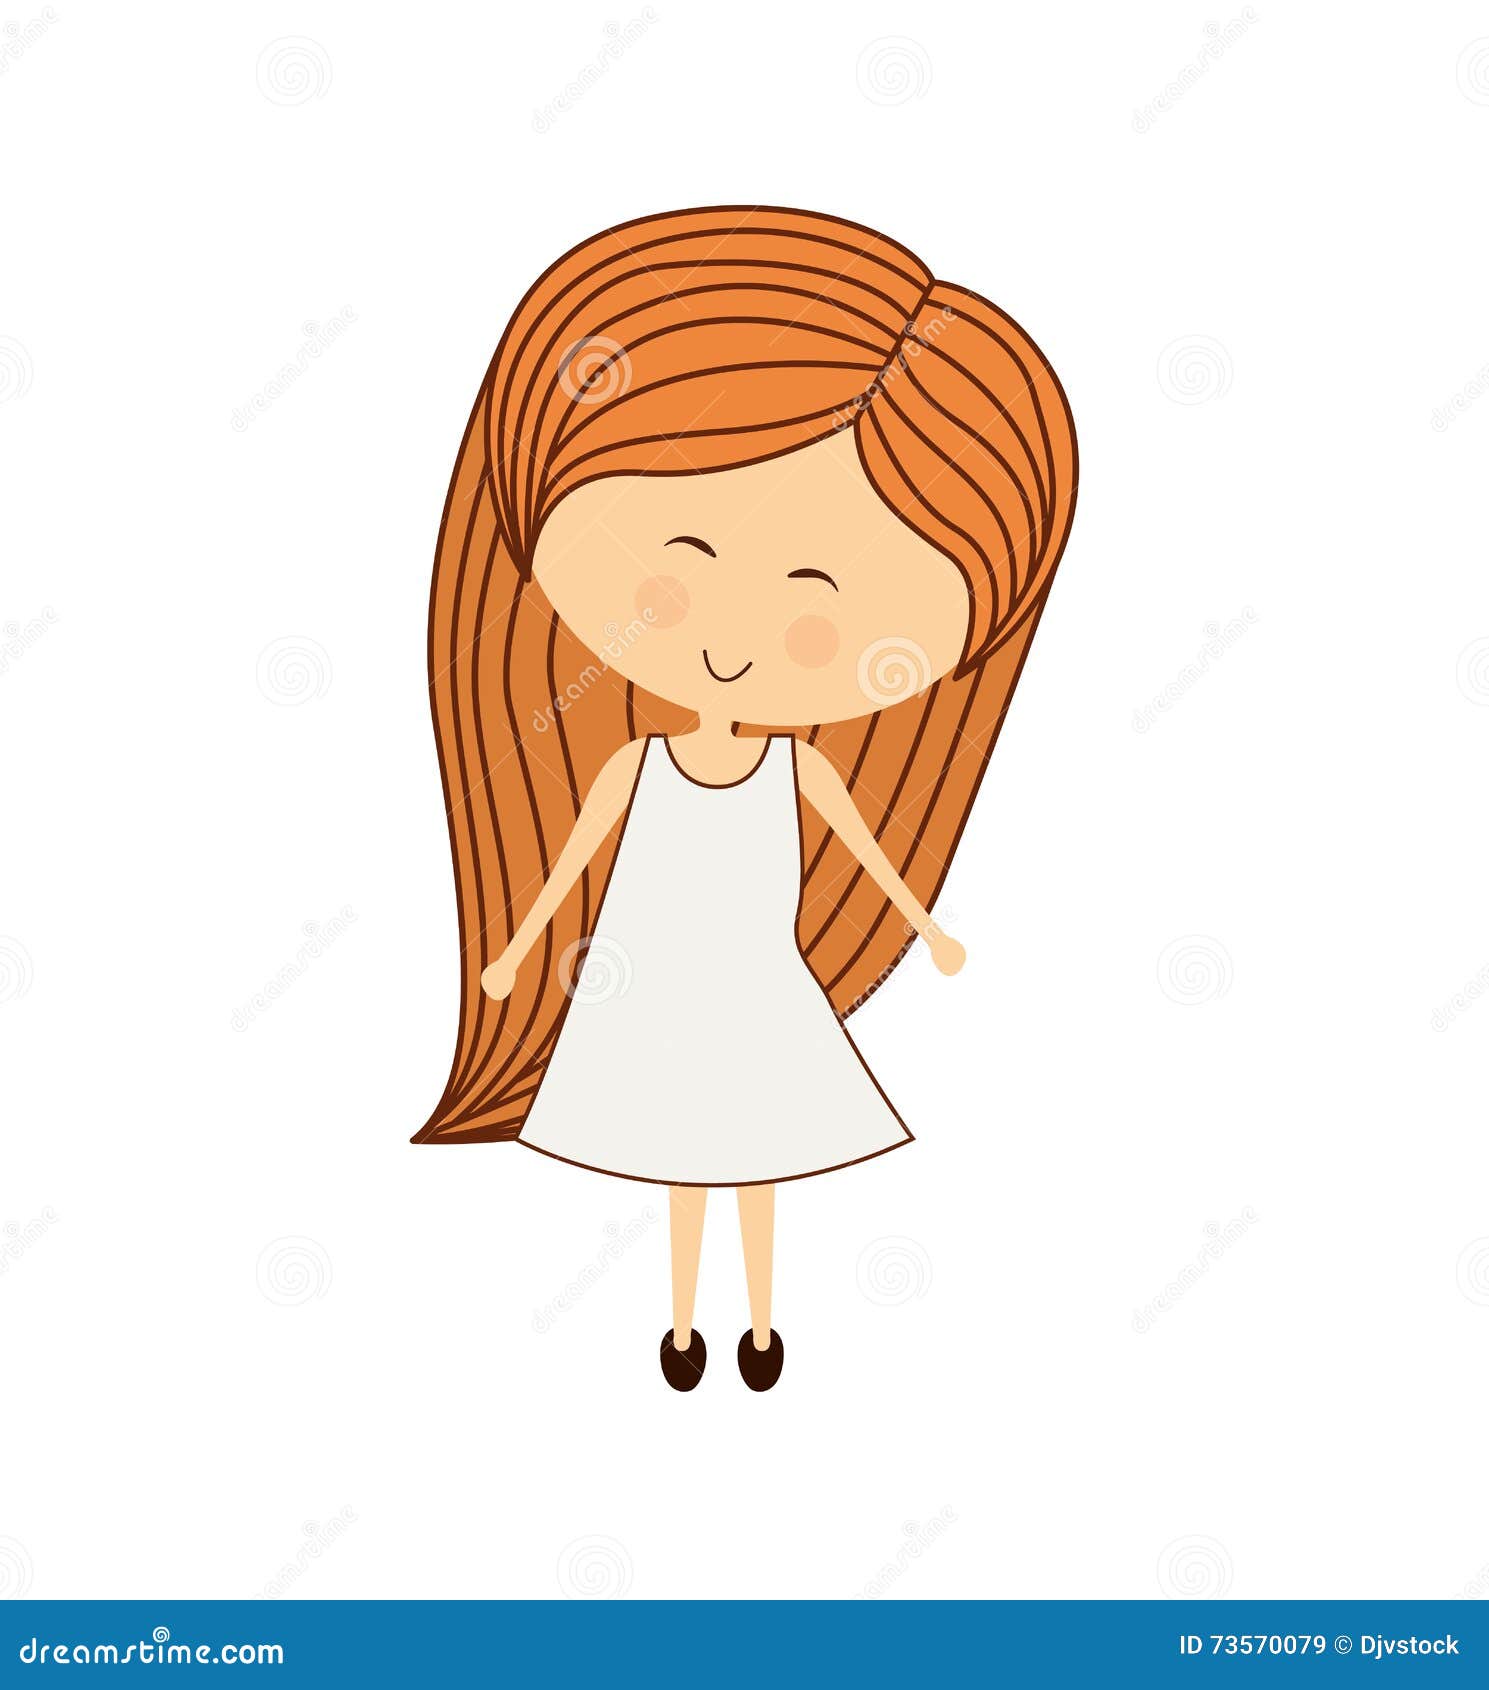 Cute Little Girl with Long Hair Stock Vector - Illustration of heart, face:  73570079